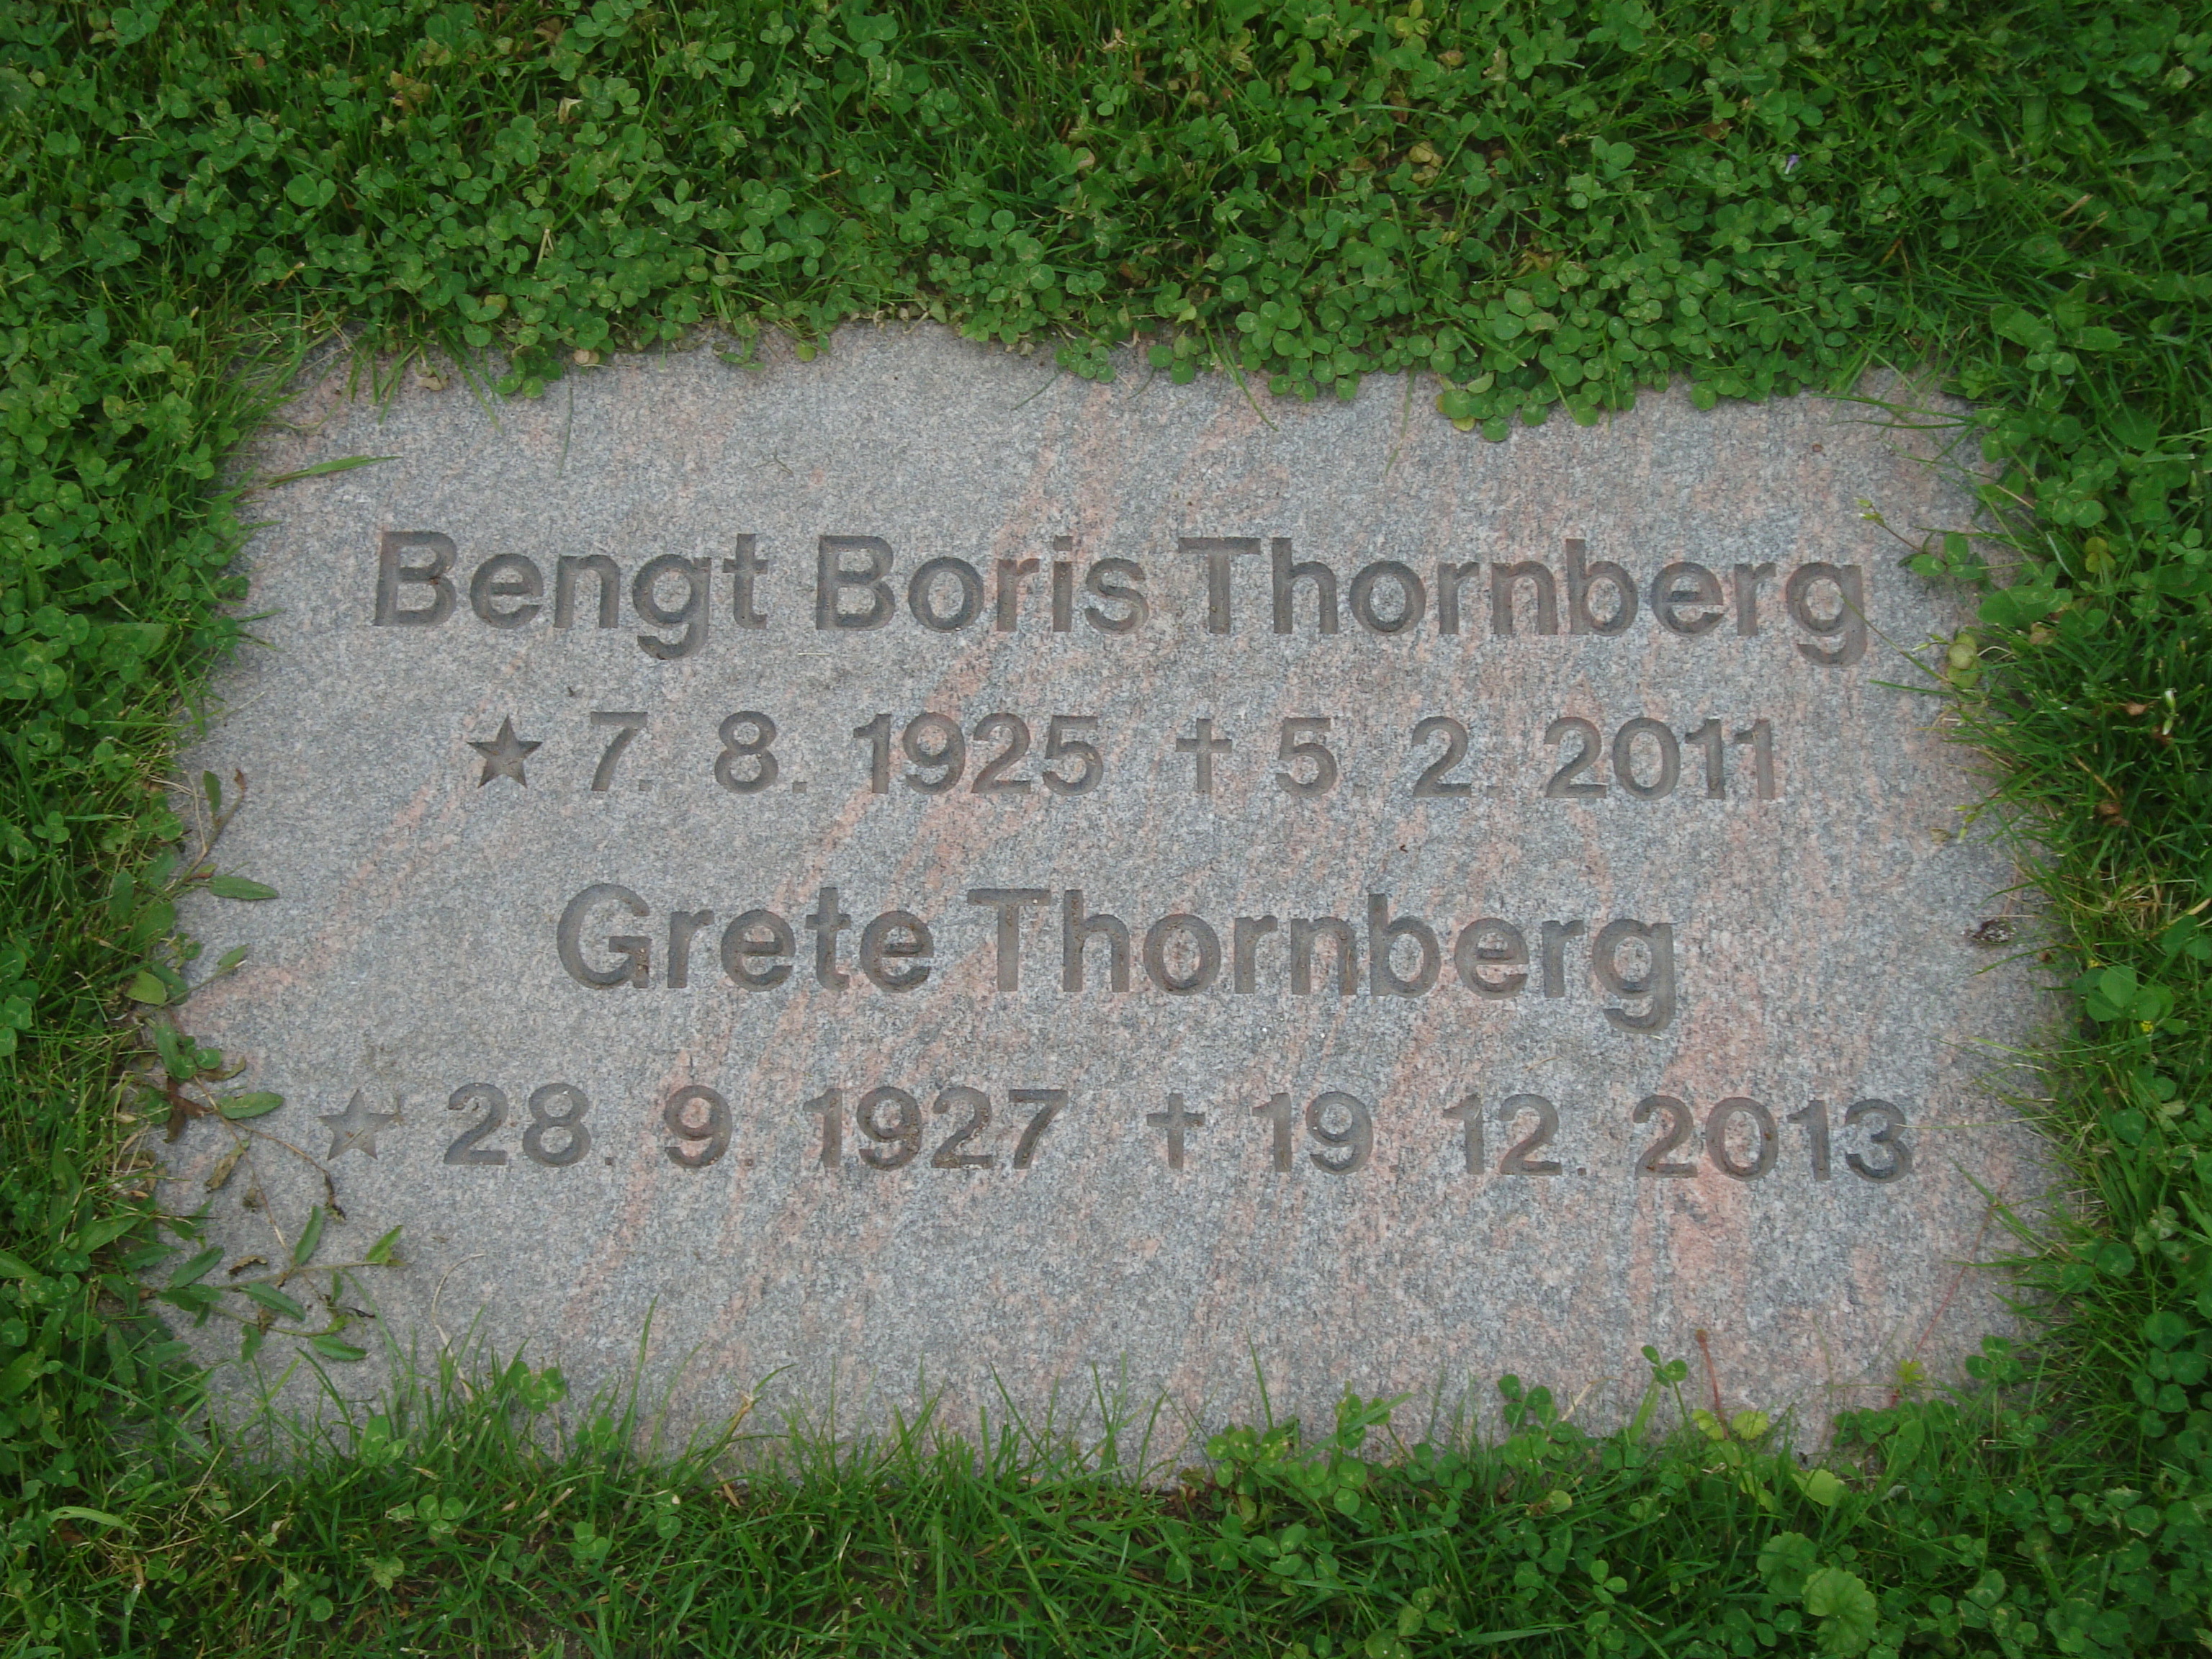 Bengt Boris Thornberg.JPG